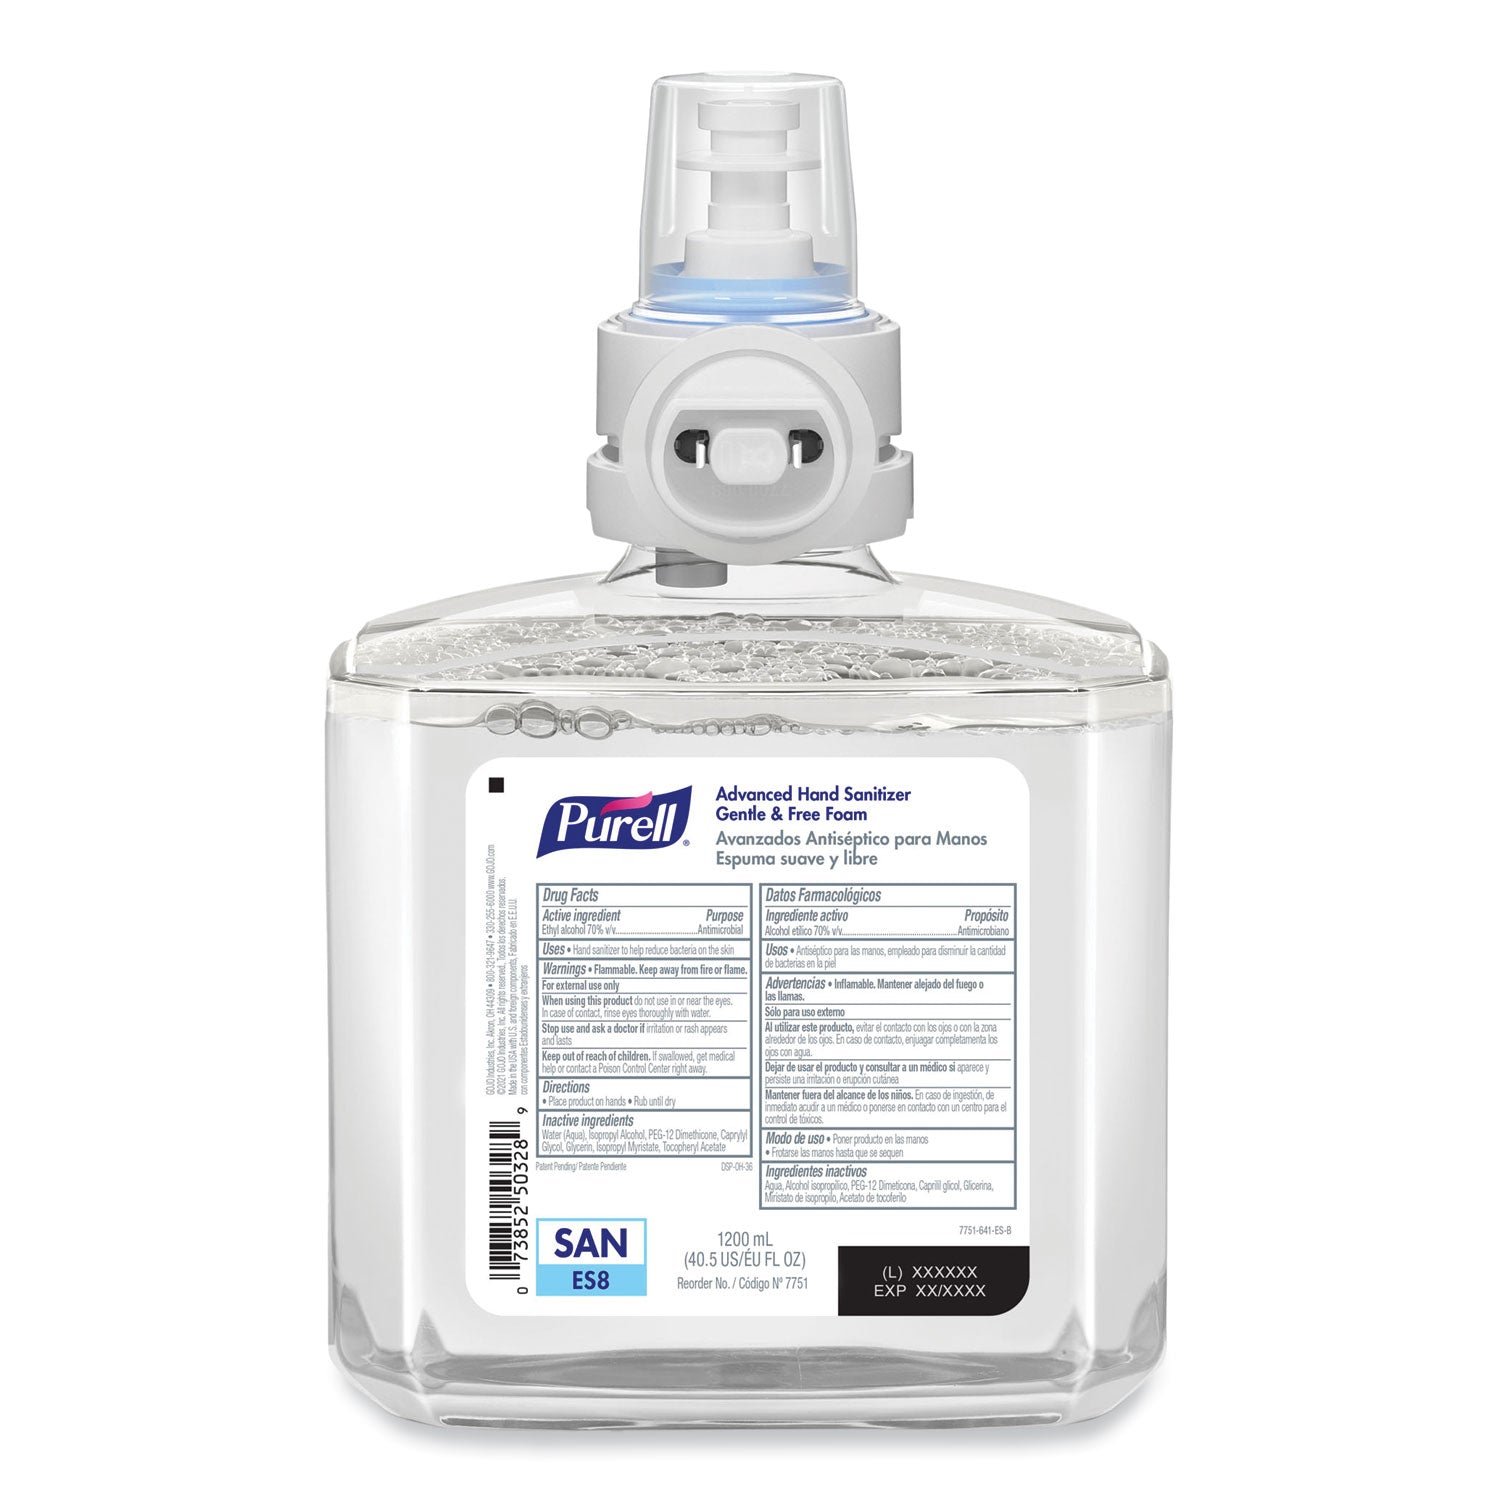 advanced-hand-sanitizer-gentle-and-free-foam-1200-ml-refill-fragrance-free-for-es8-dispensers-2-carton_goj775102 - 2